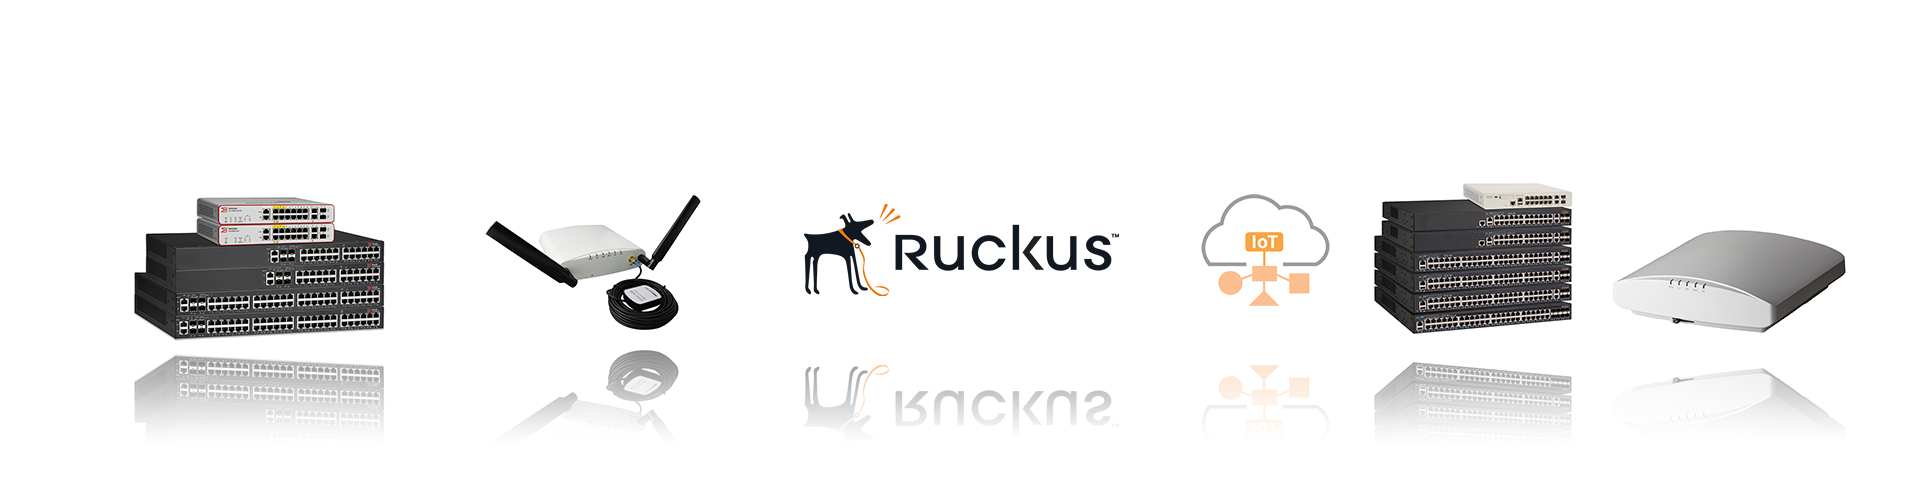 Ruckus wireless systems